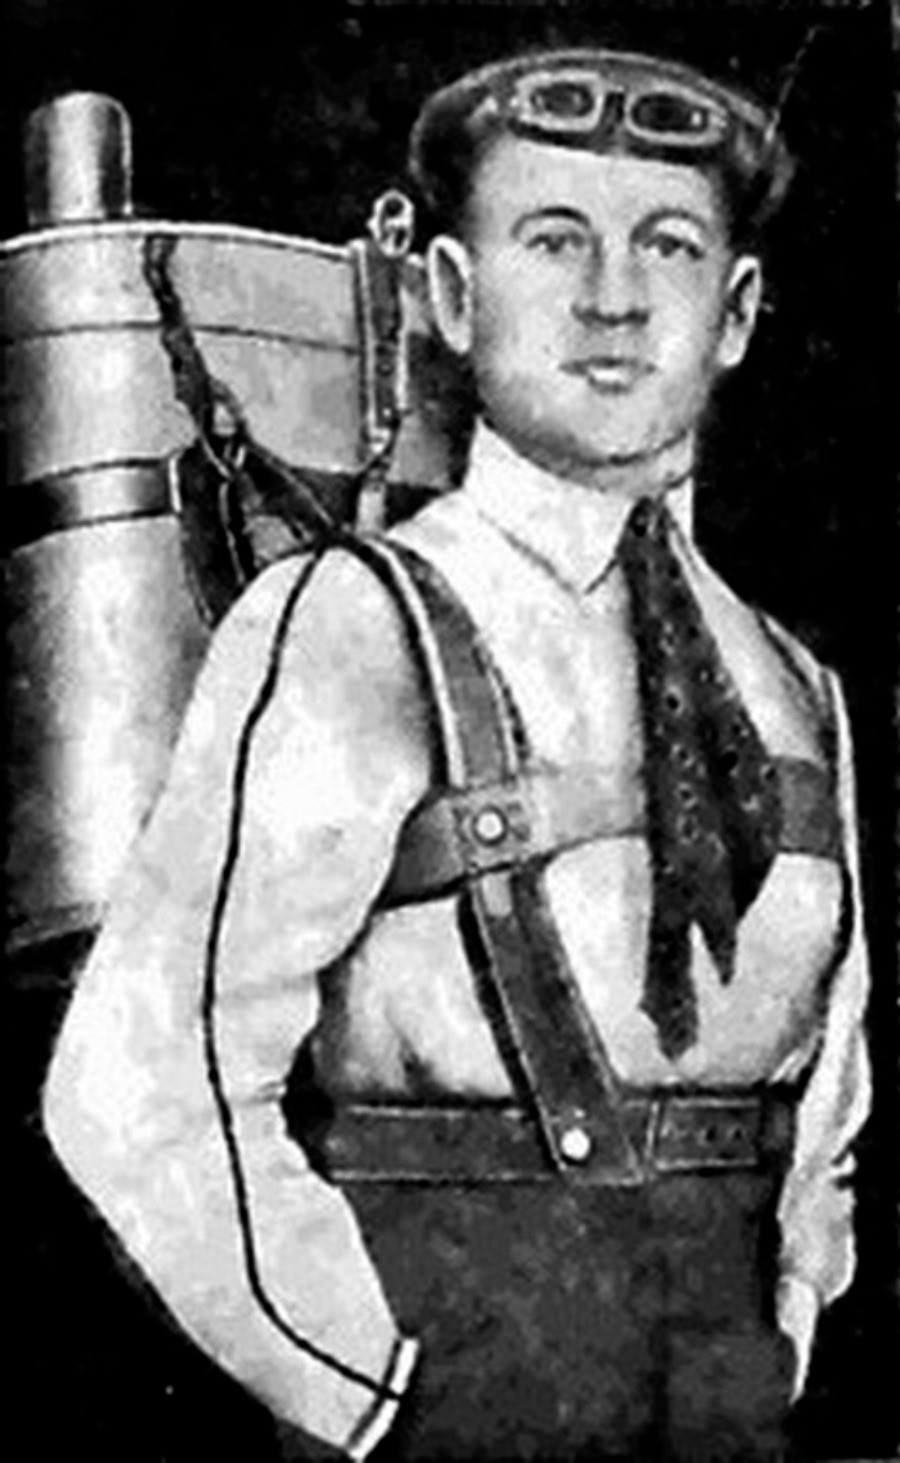 Gleb Kotelnikov wearing a backpack parachute